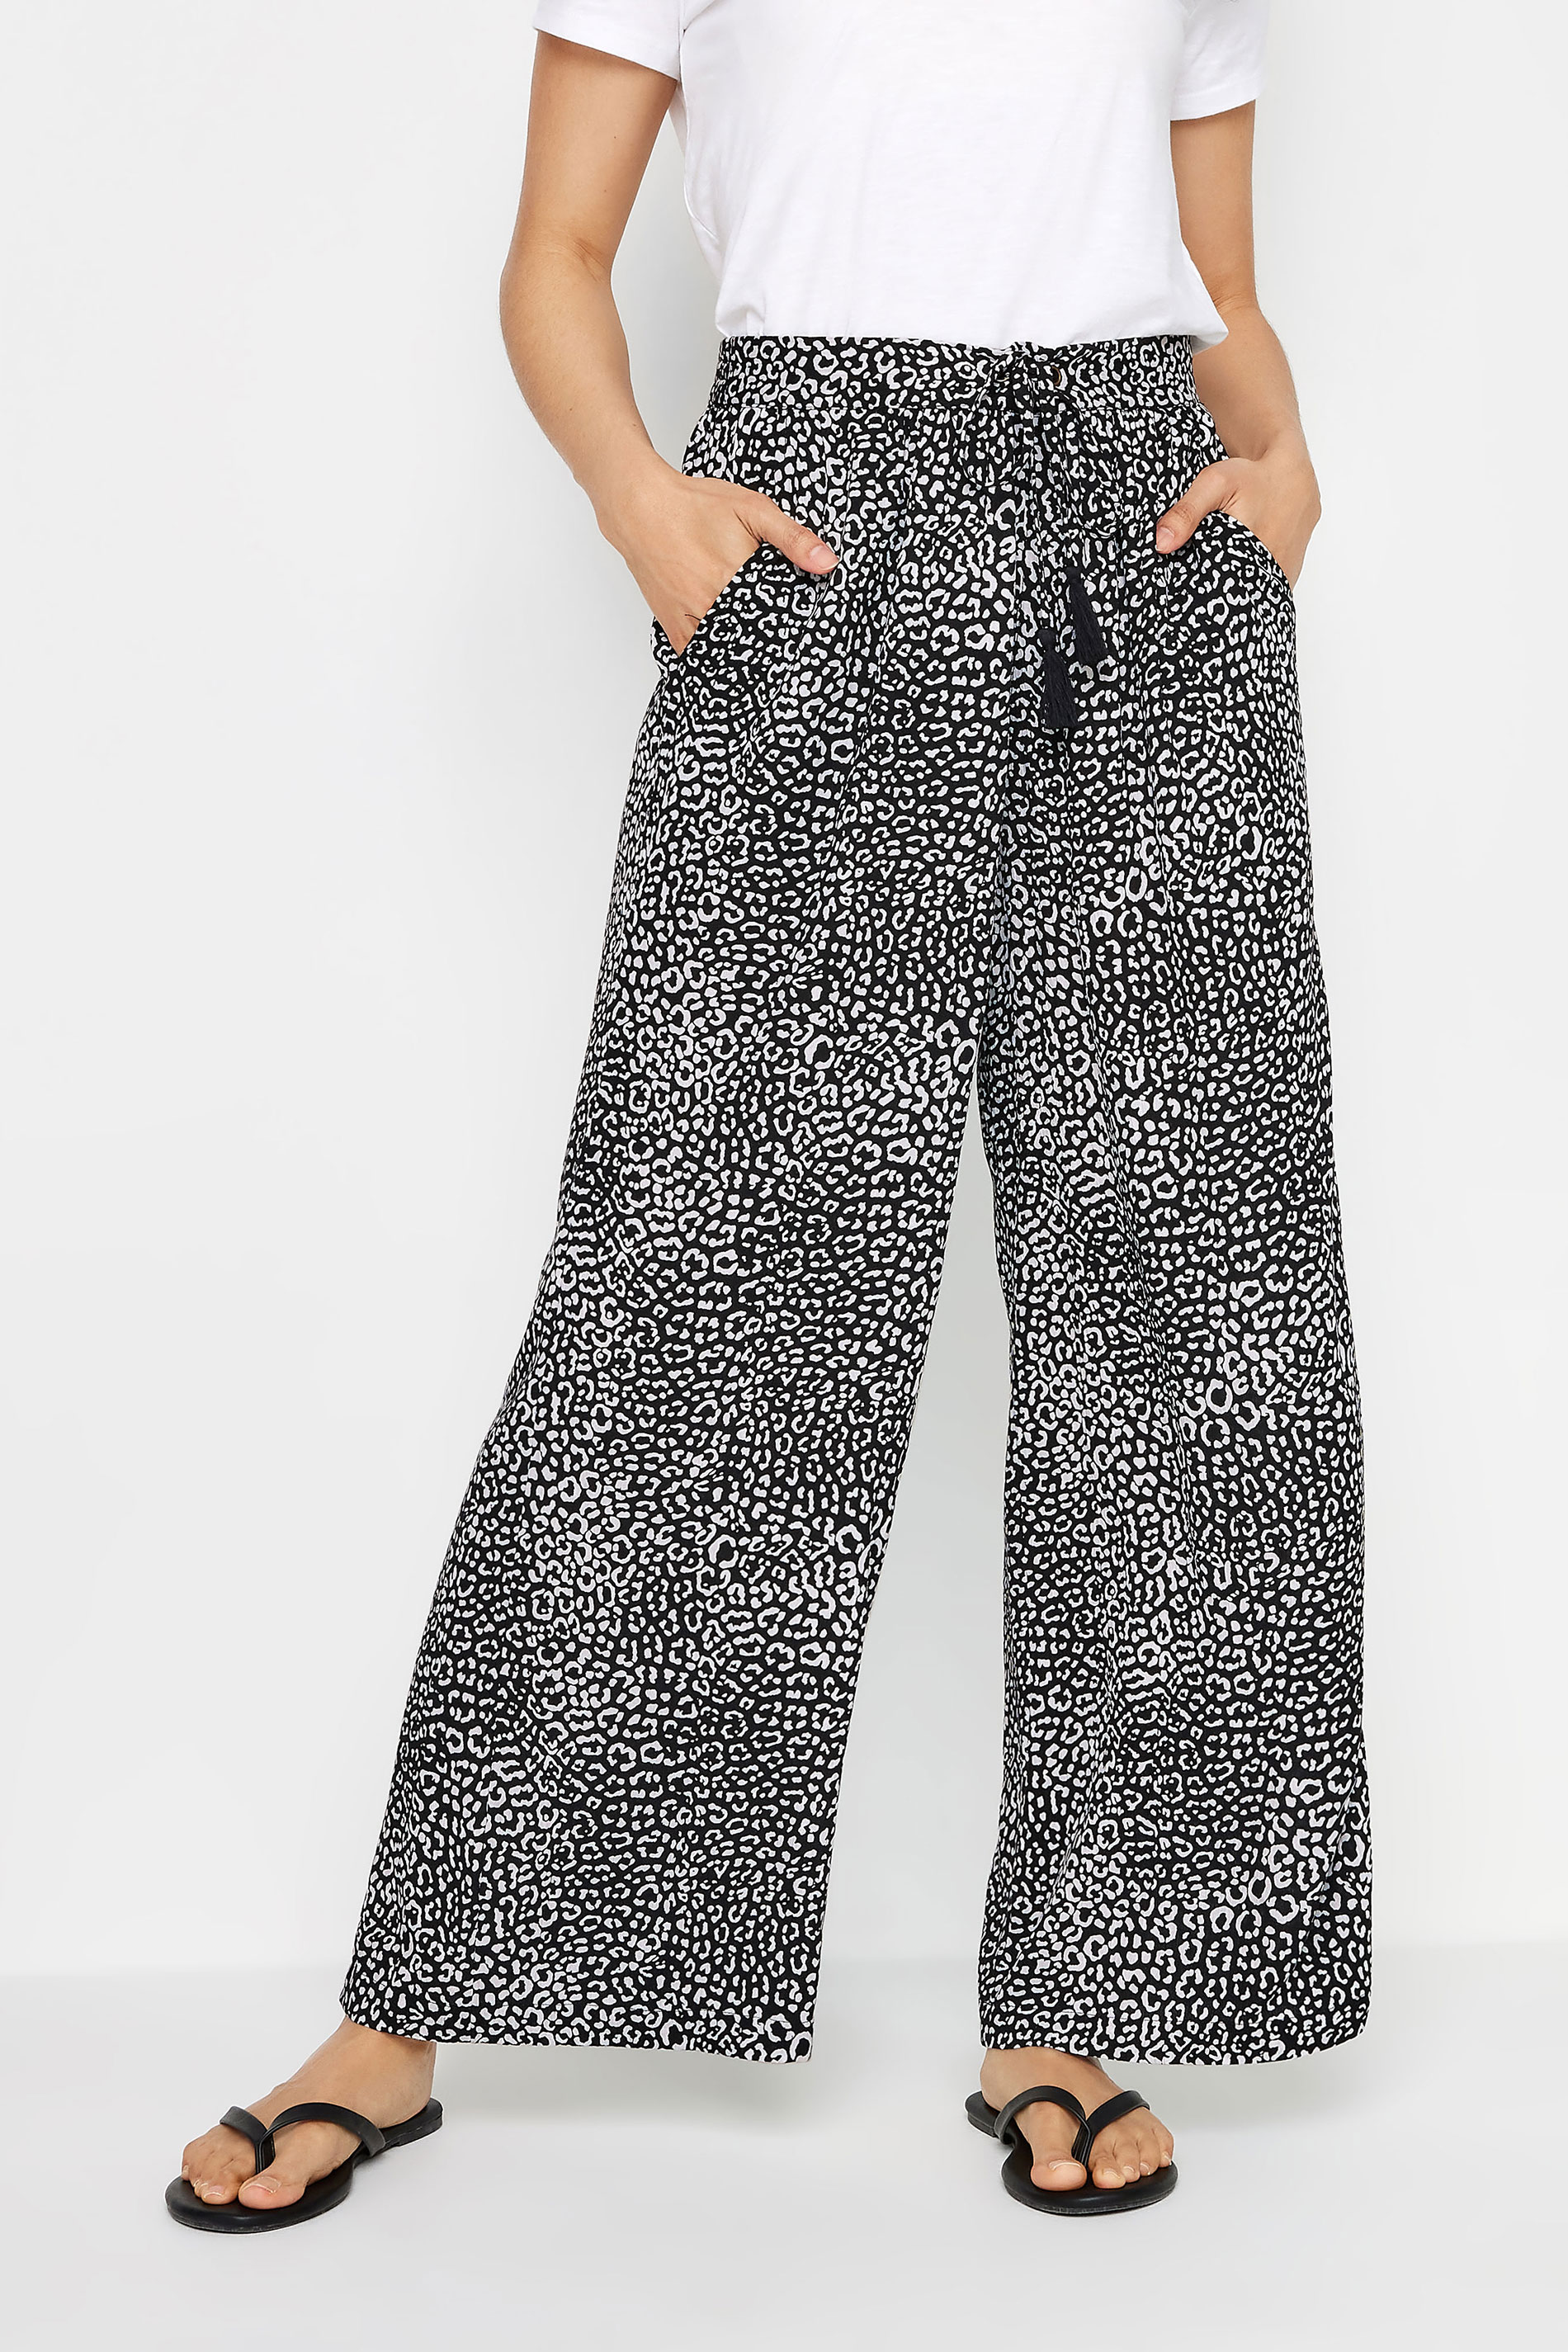 M&Co Black Leopard Animal Print Tassel Detail Wide Leg Trousers | M&Co 1